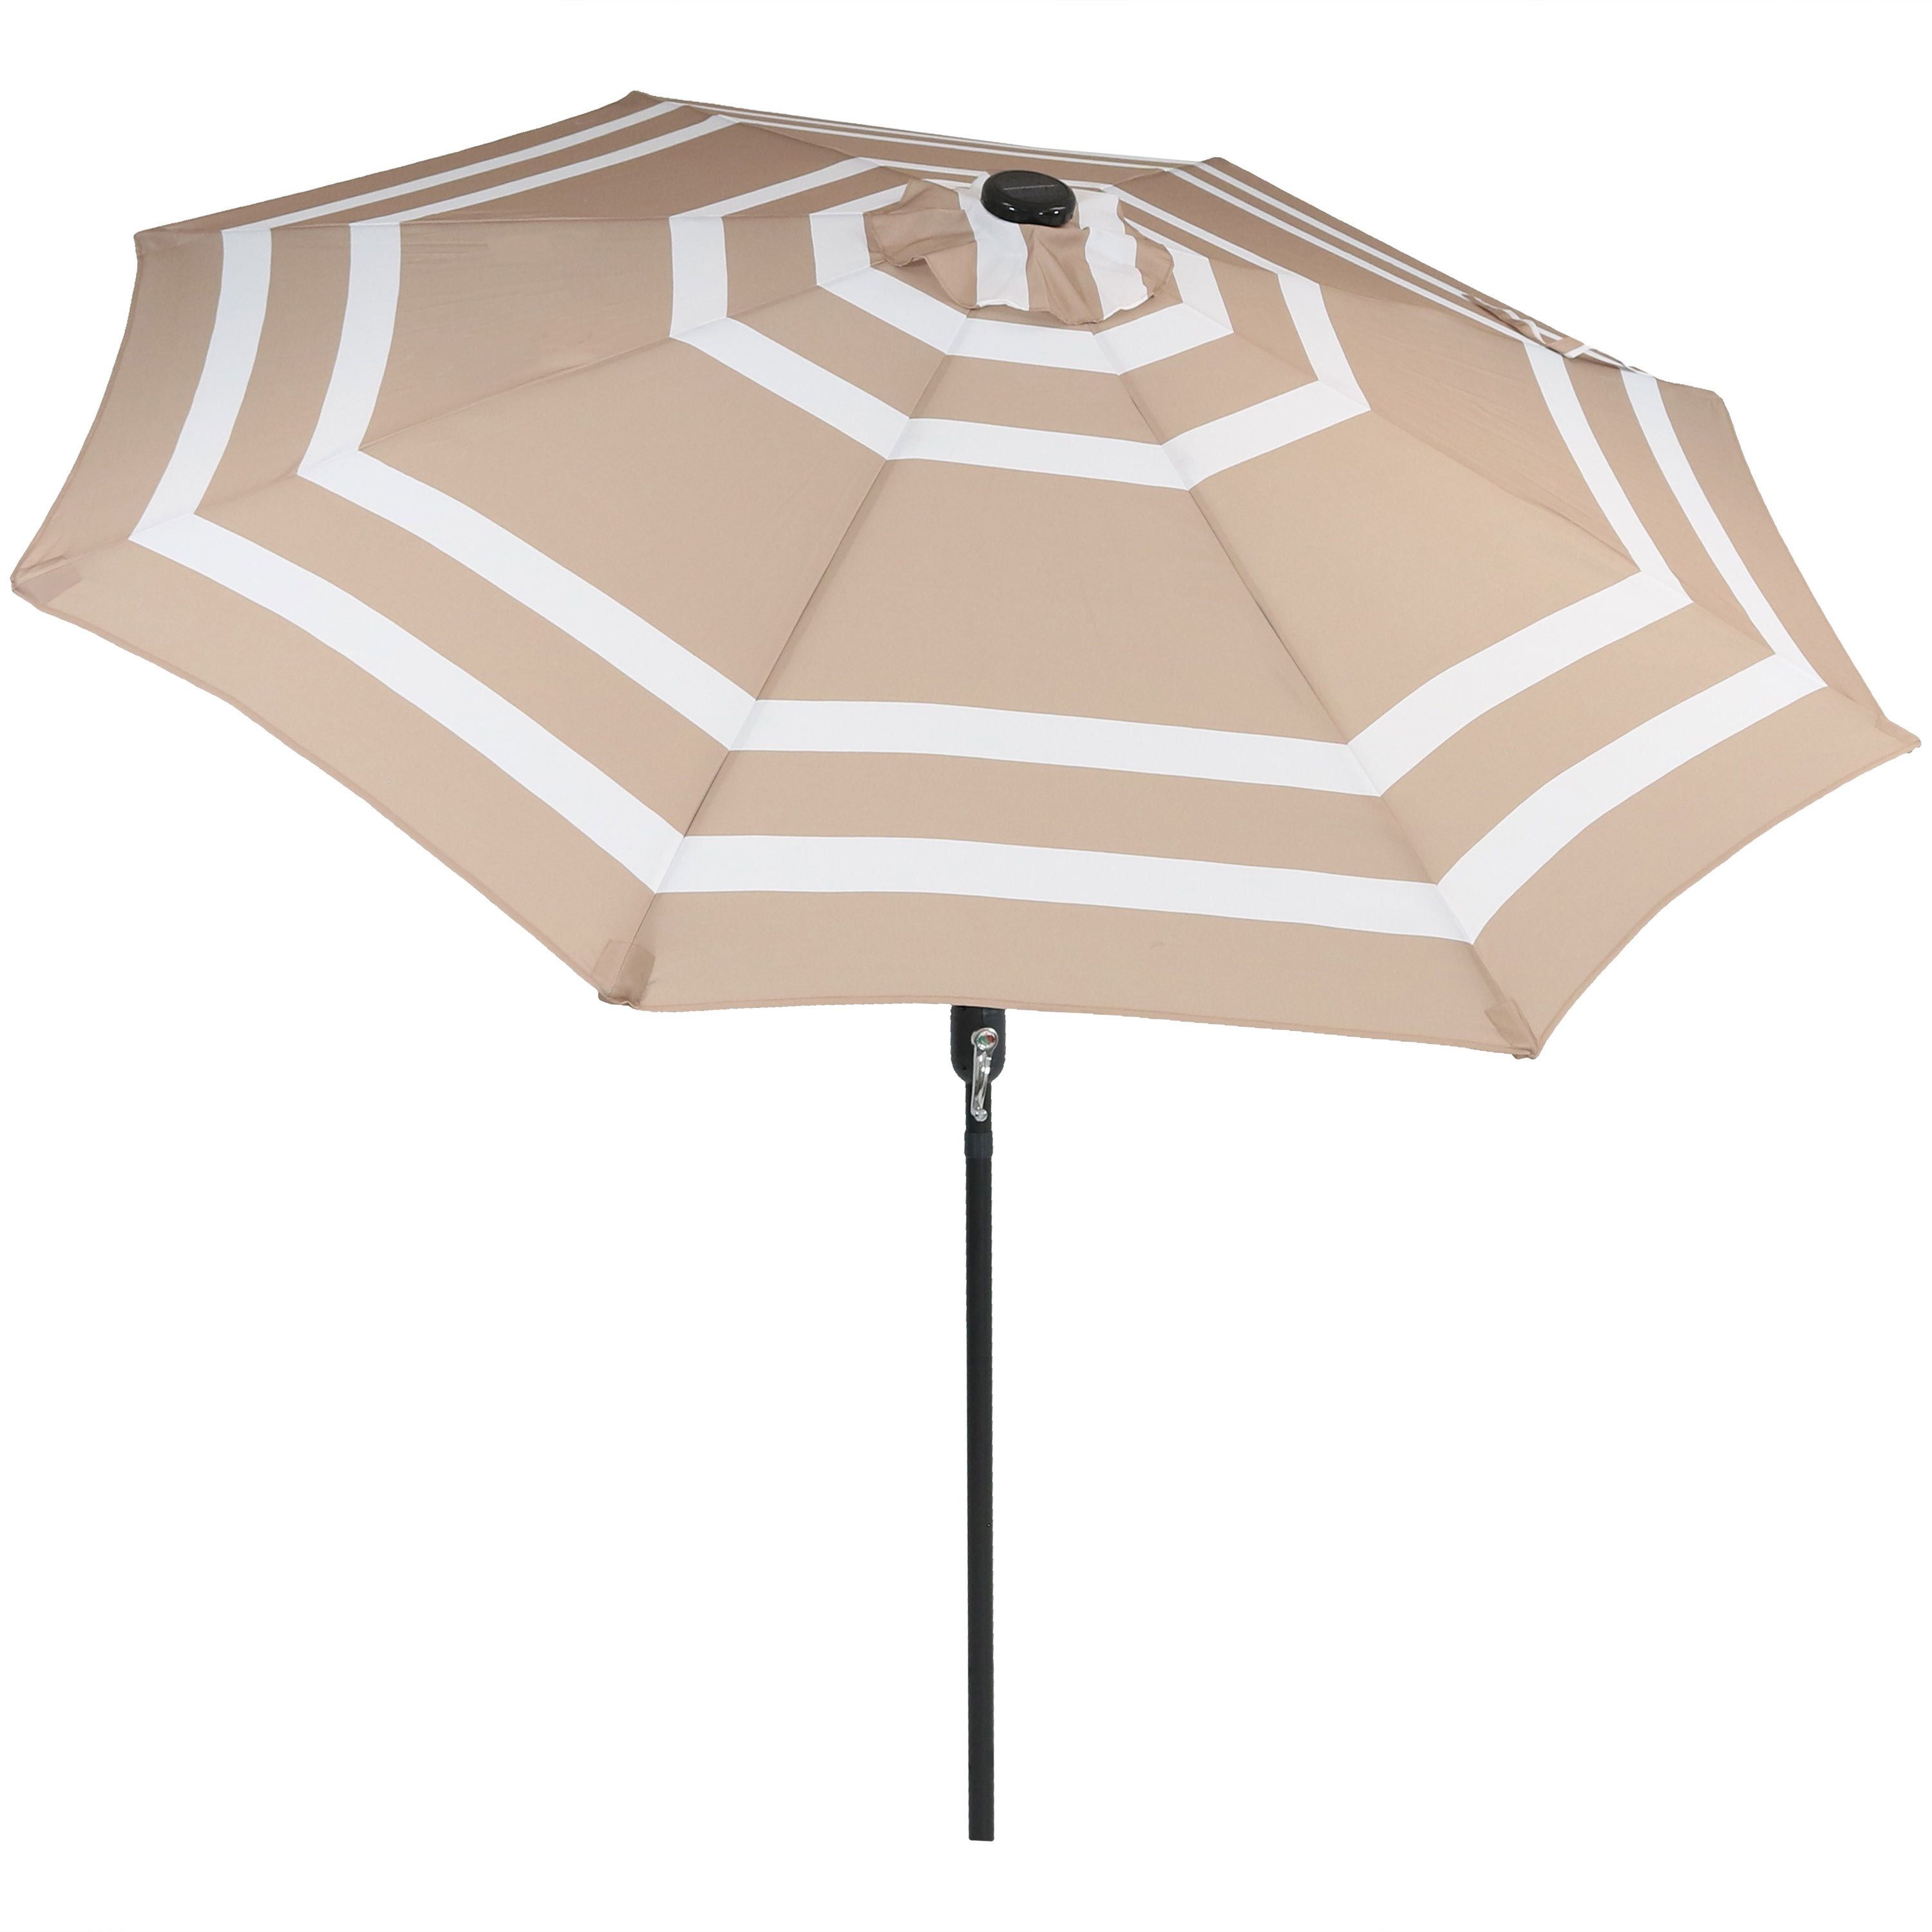 Harwich Market Umbrellas With Regard To Most Current Docia 9' Market Umbrella (View 8 of 20)